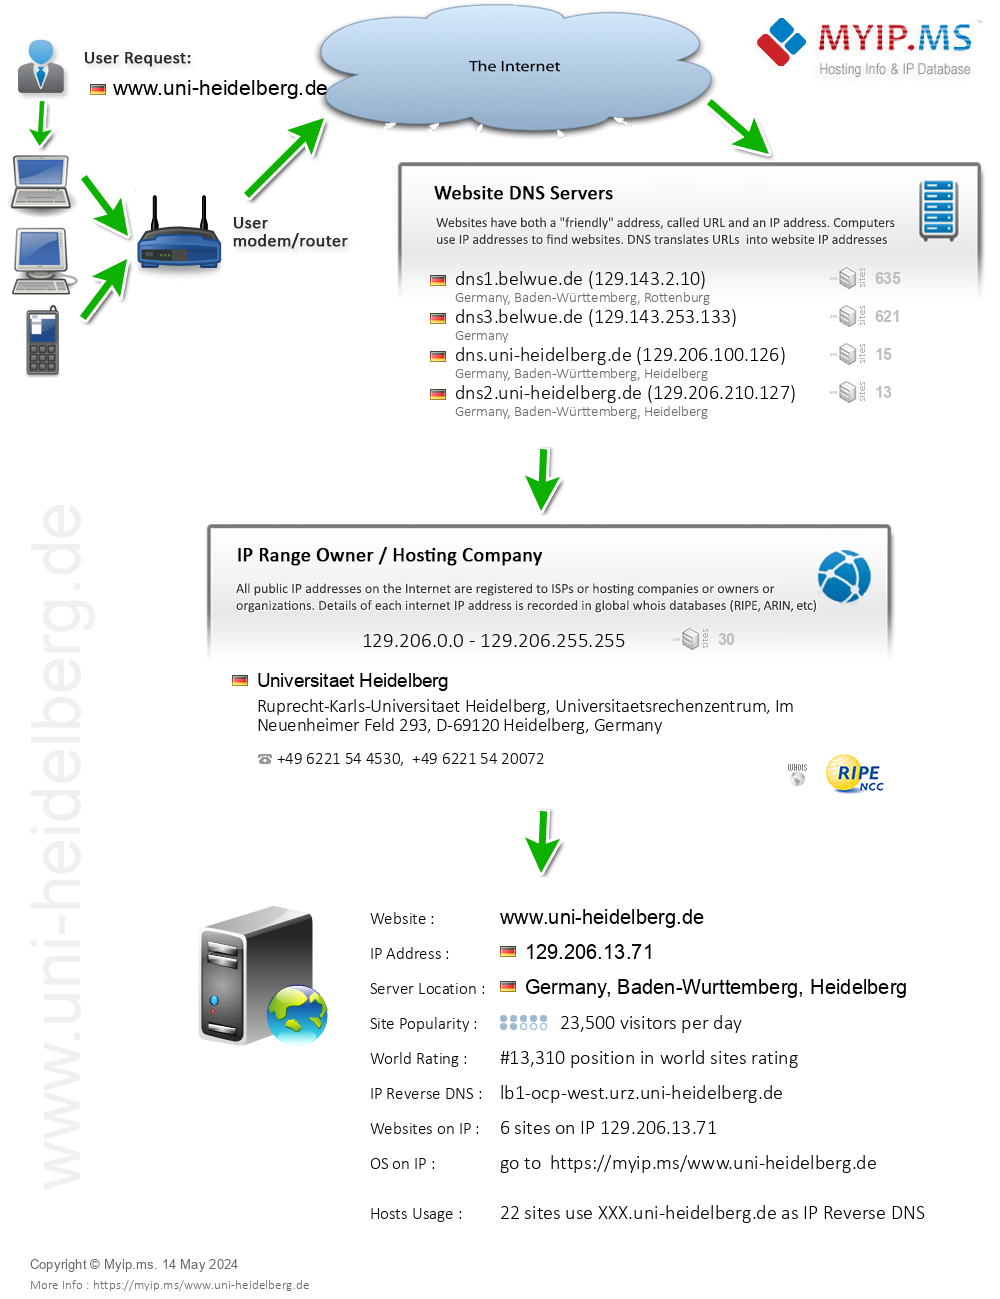 Uni-heidelberg.de - Website Hosting Visual IP Diagram